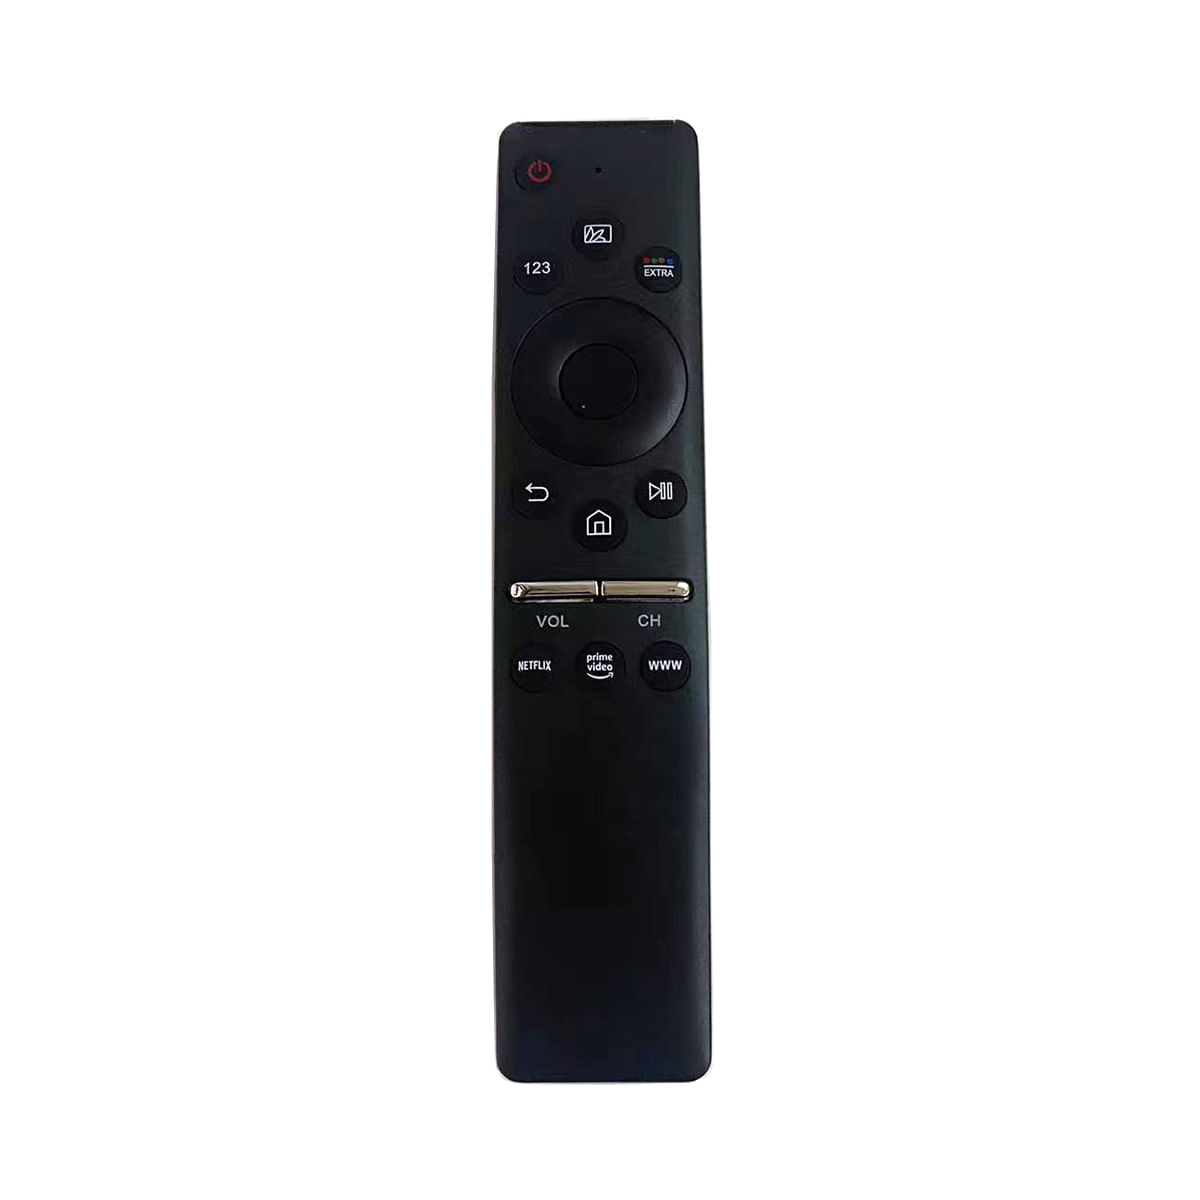 Control Remoto Smart Tv Samsung acceso directo netflix amazon